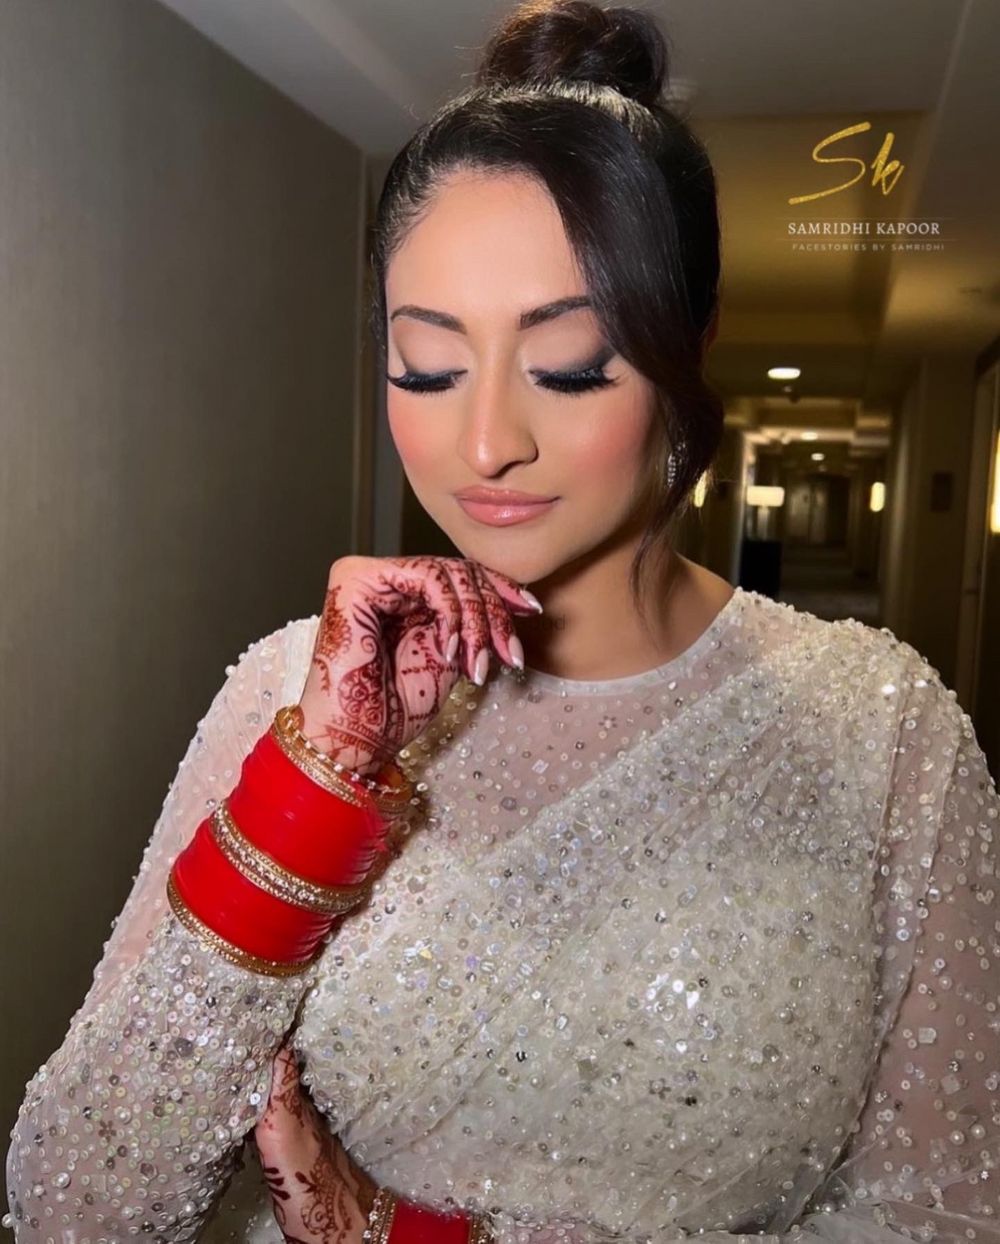 Photo By Facestories by Samridhi - Bridal Makeup